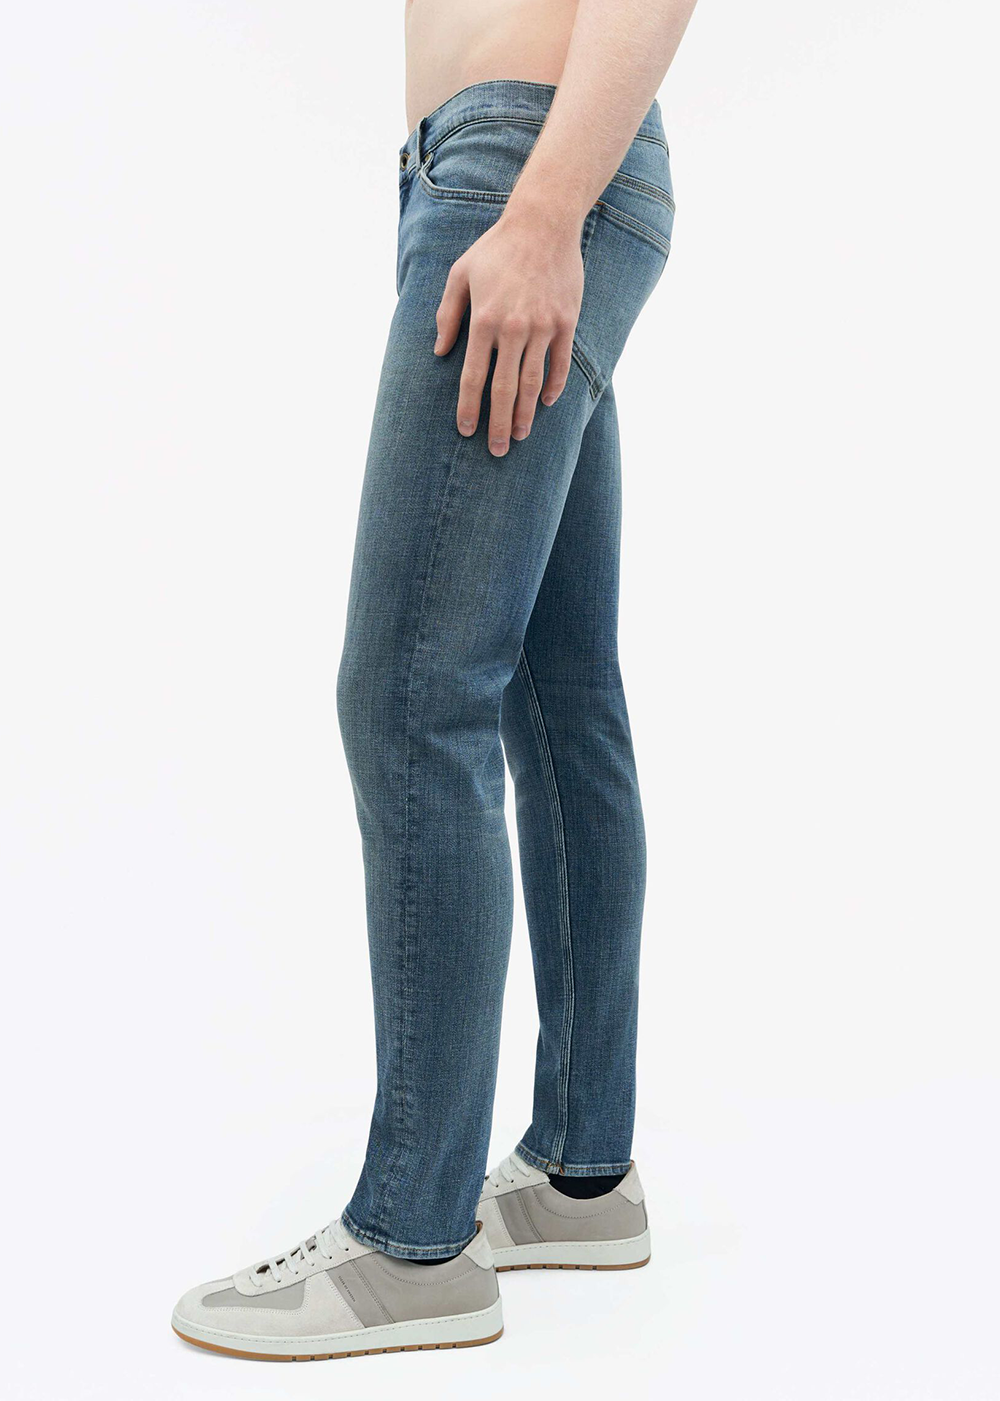 Evolve Jeans - Medium Blue - Tiger of Sweden Canada - Danali